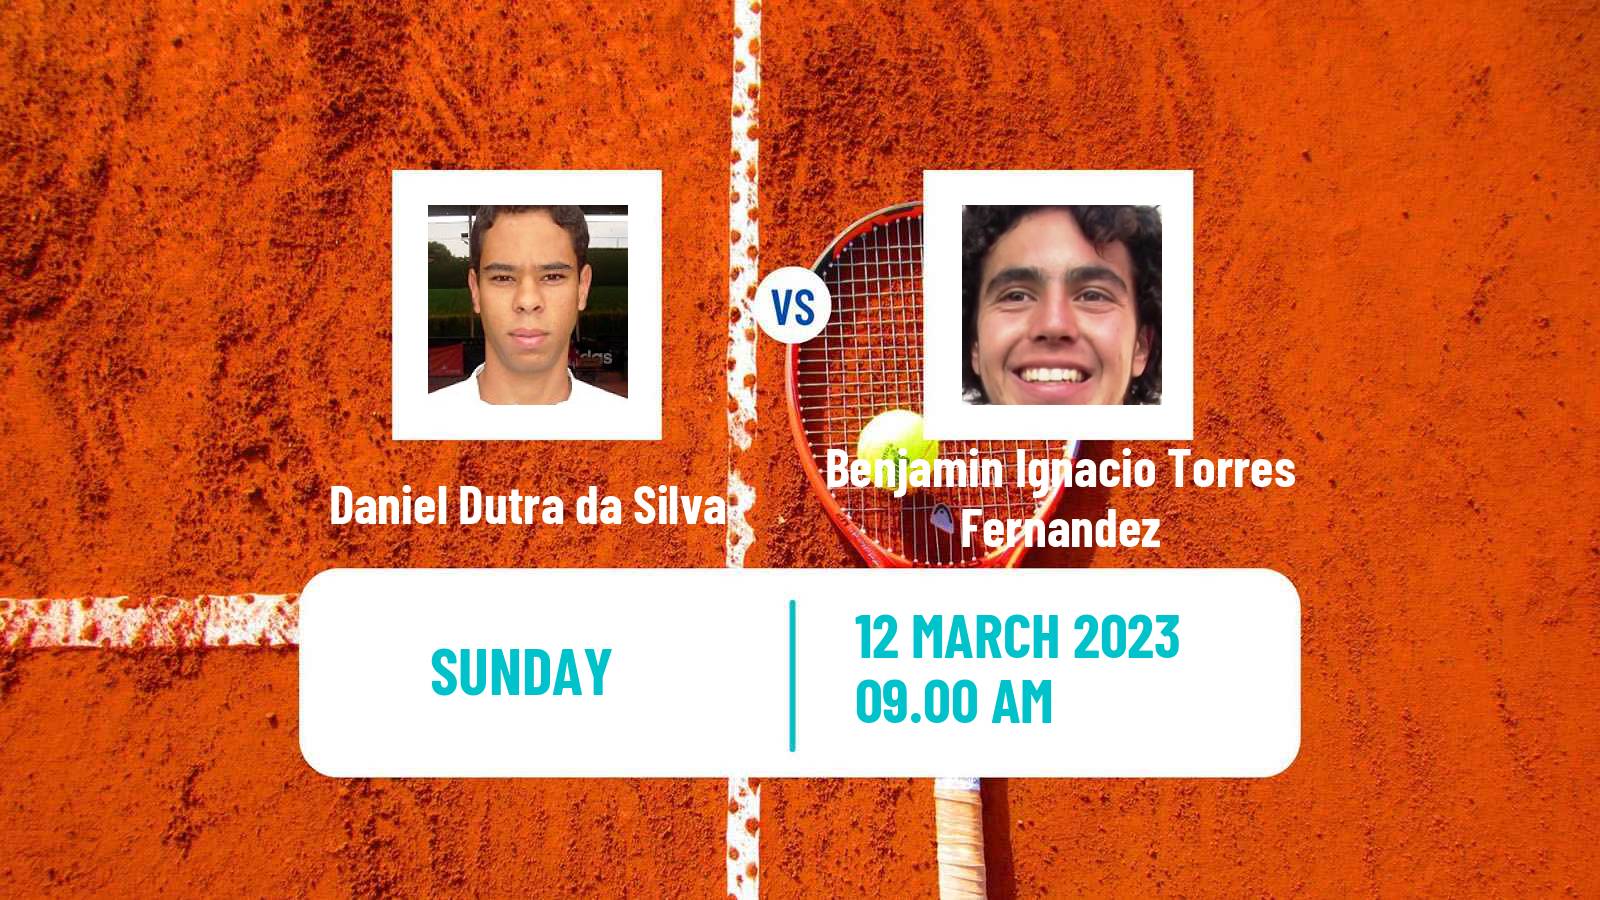 Tennis ATP Challenger Daniel Dutra da Silva - Benjamin Ignacio Torres Fernandez